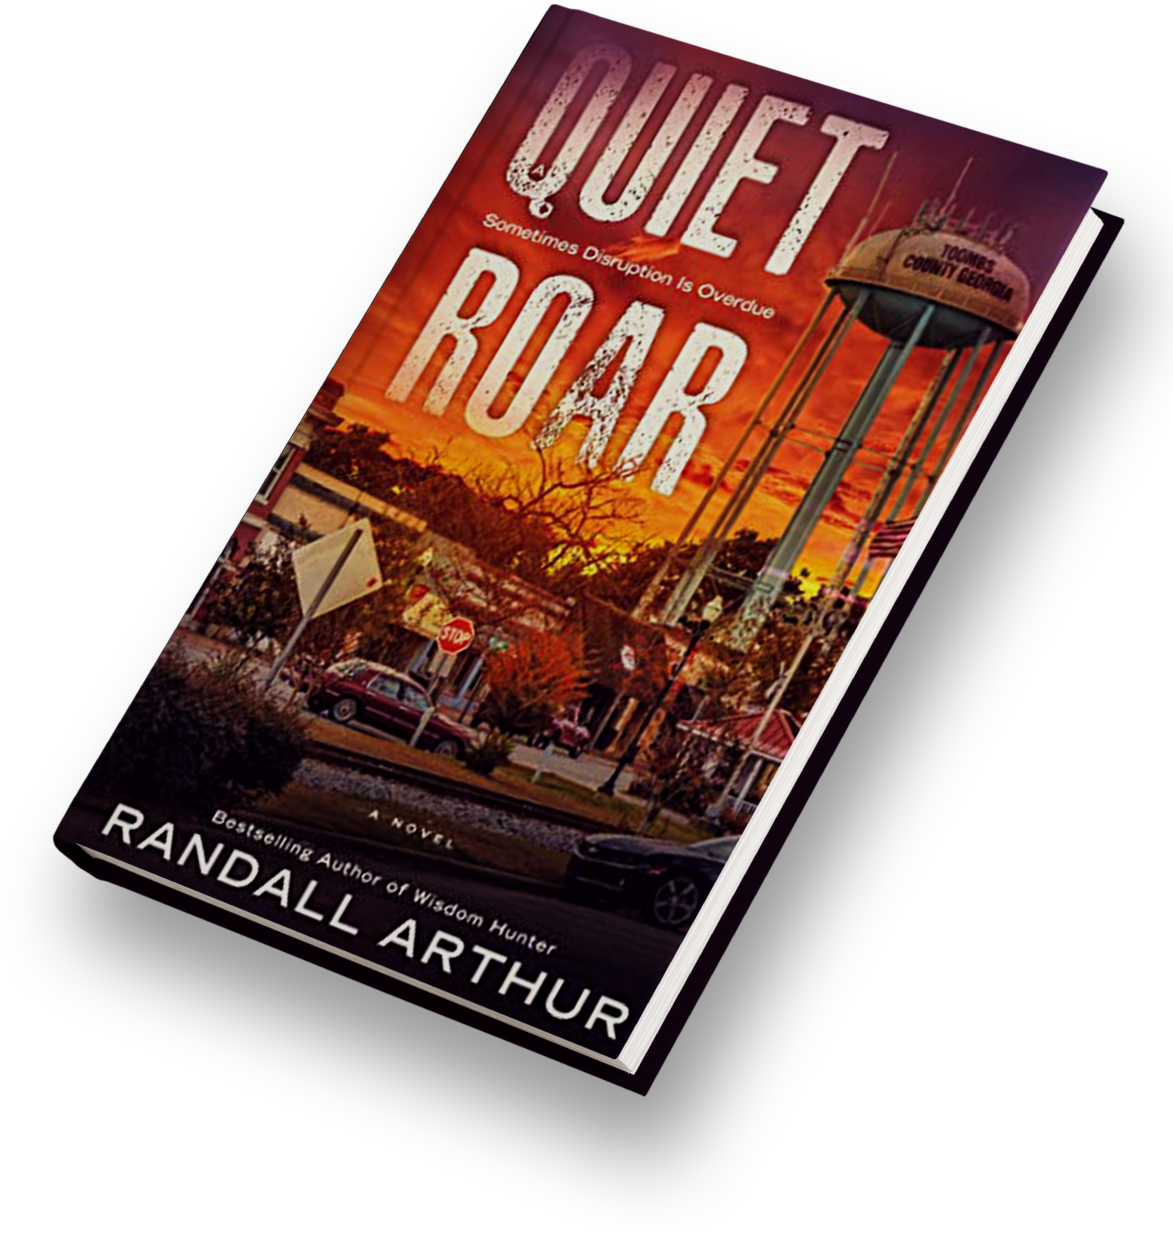 A Quiet Roar - Randall Arthur